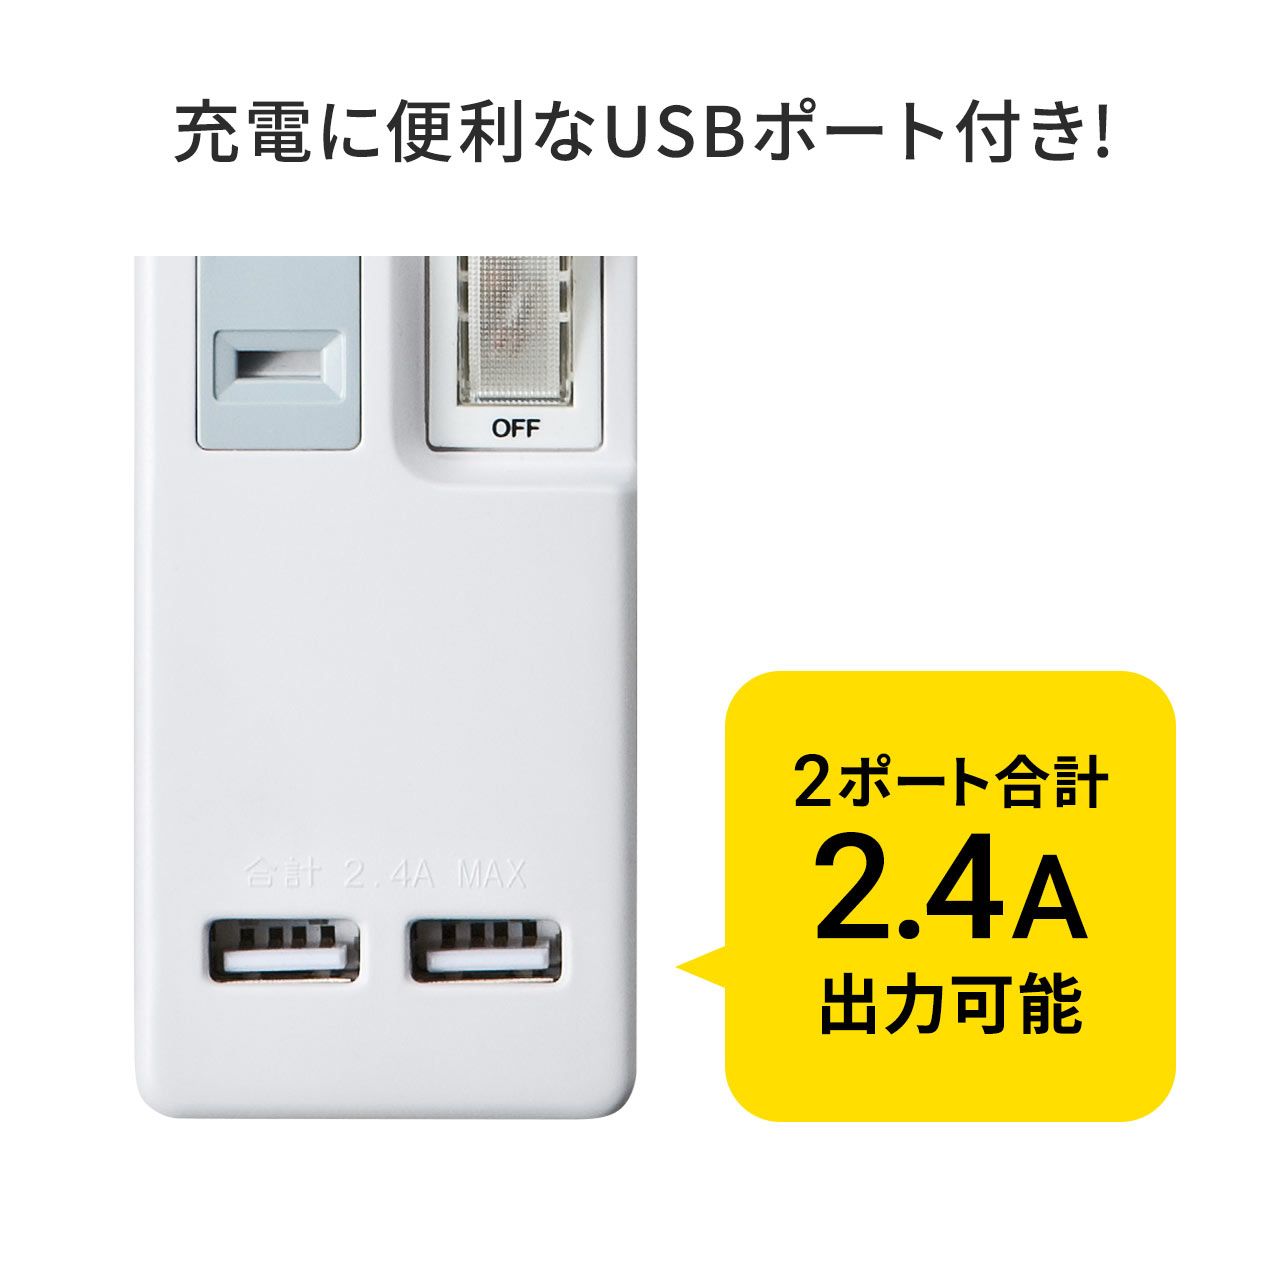 d^bv USB[d|[gt USB2|[g ő2.4A܂ 1400W 2m 4 2P ʃXCb`t 701-TAP013